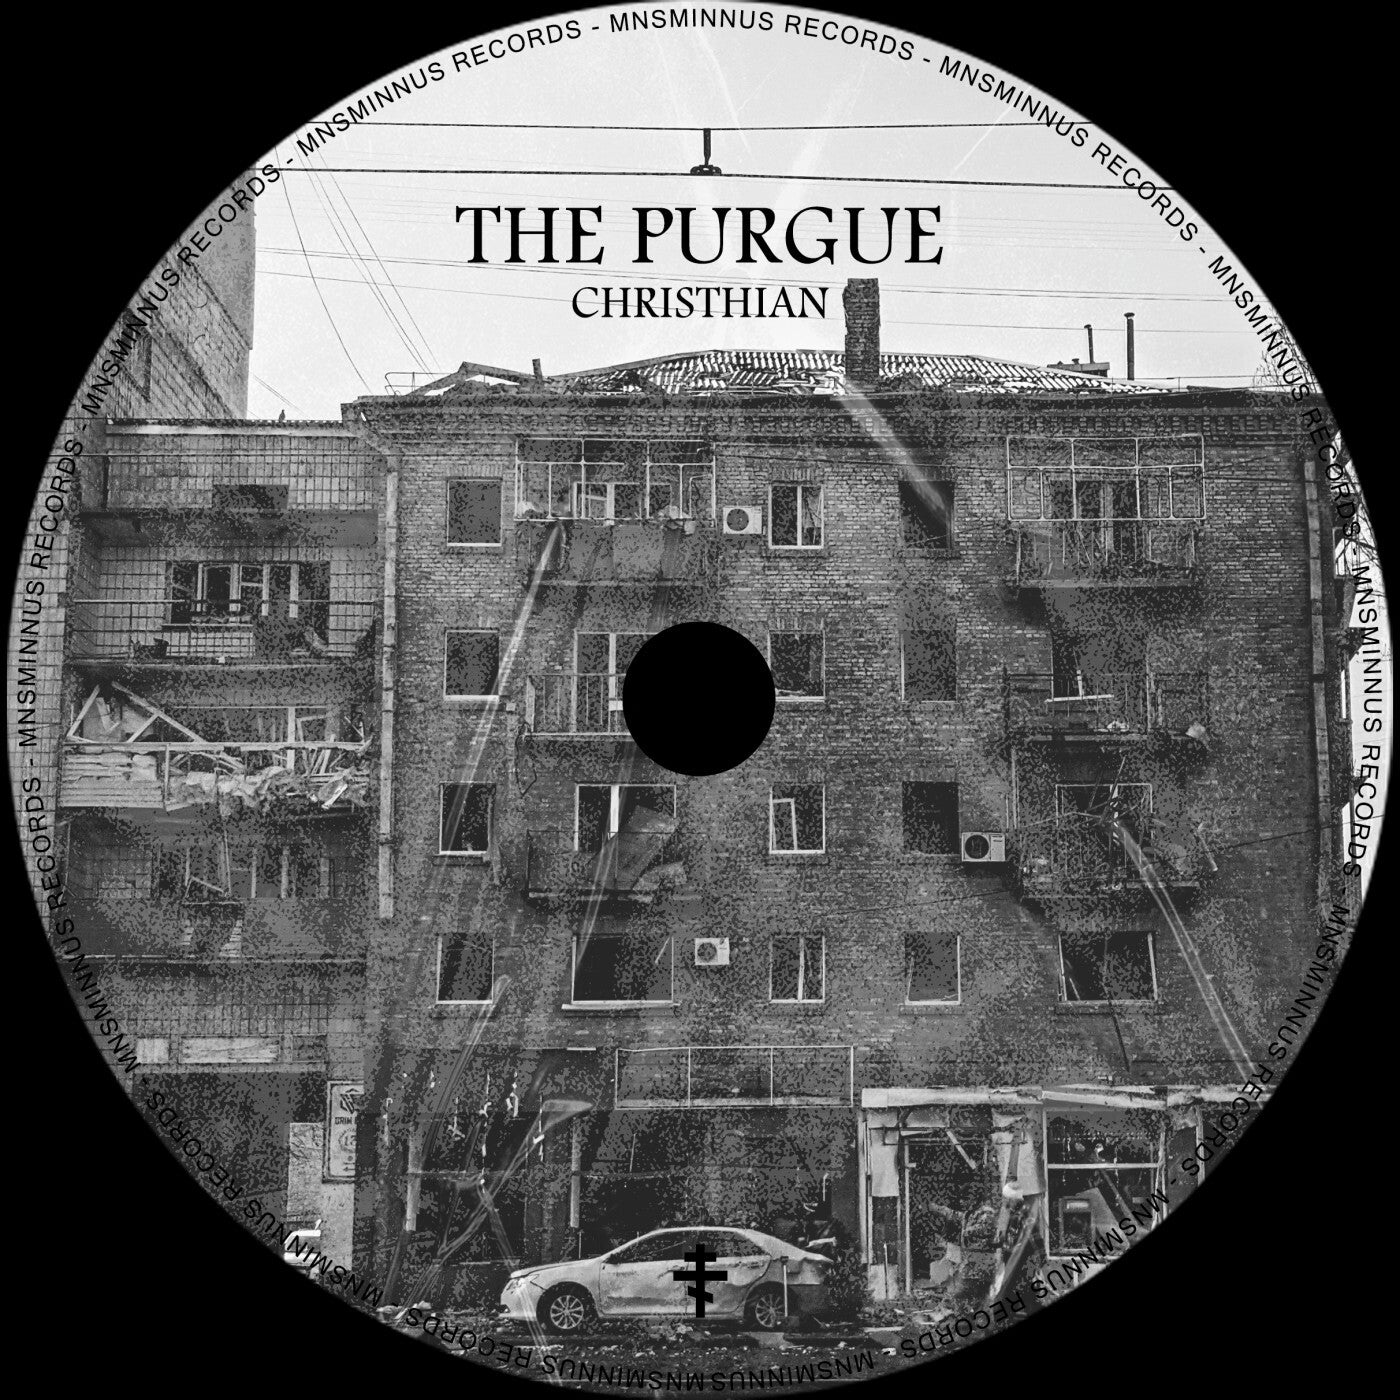 The Purgue